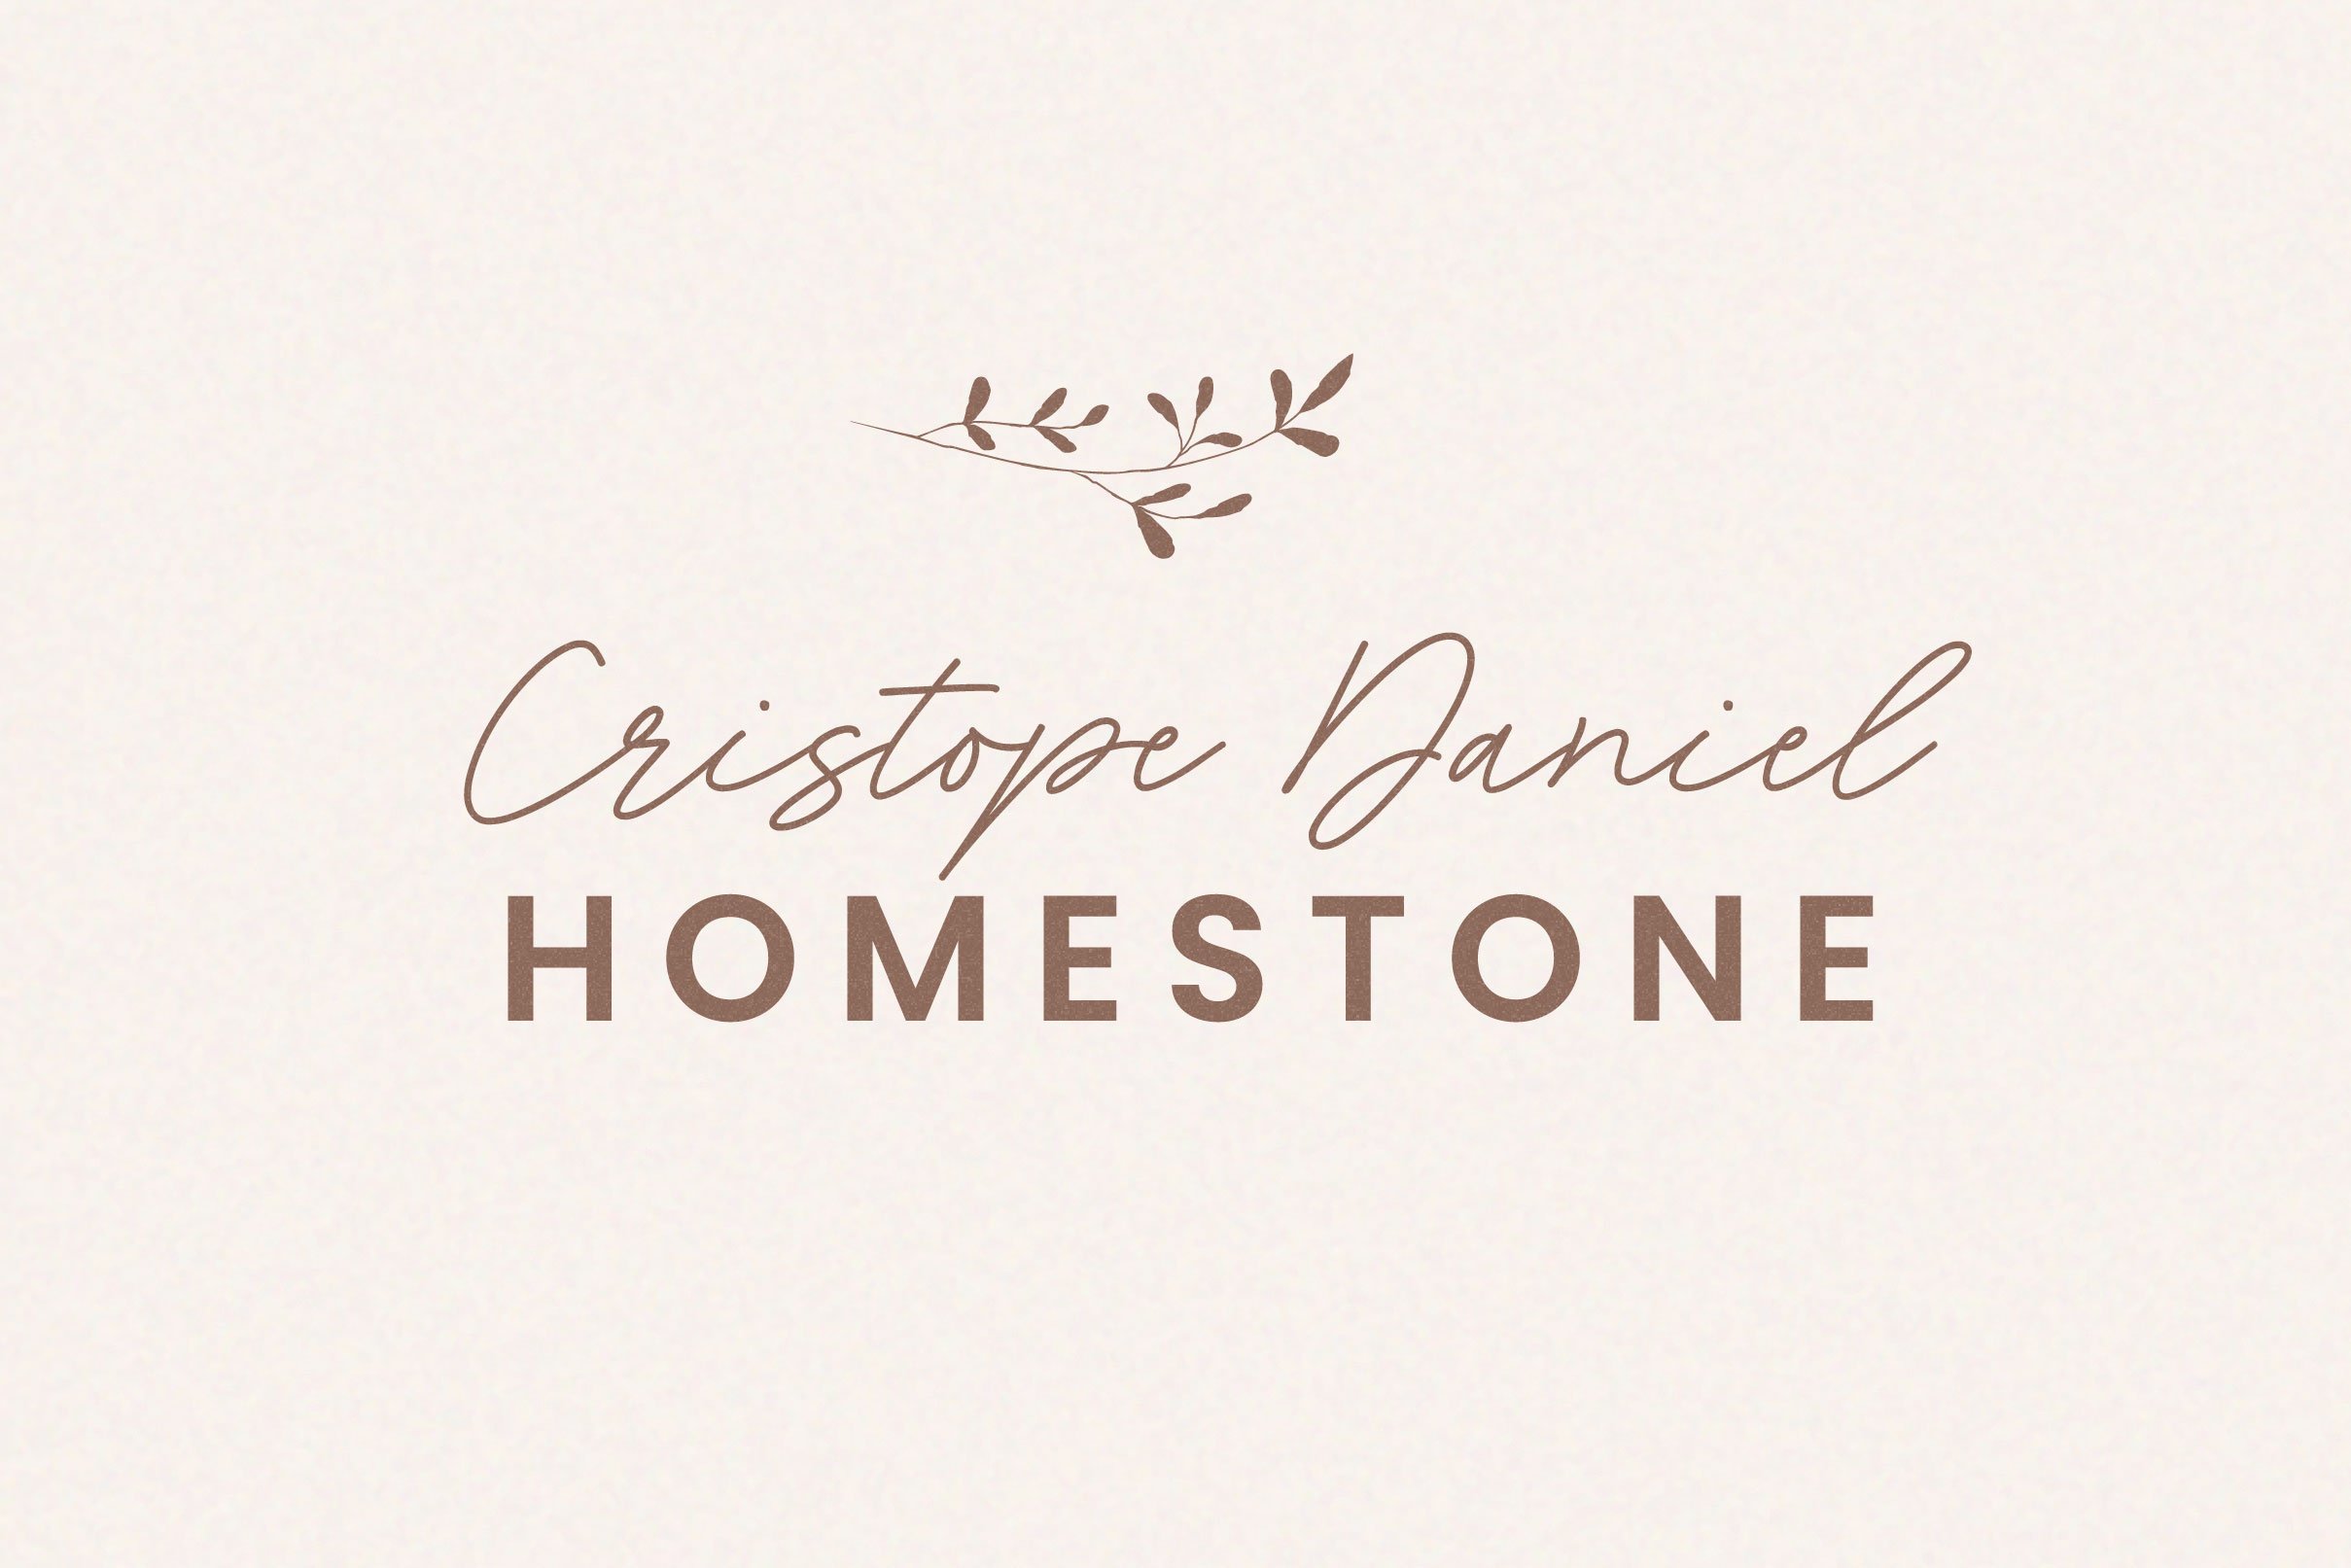 homestone monoline signature script font 281629 134